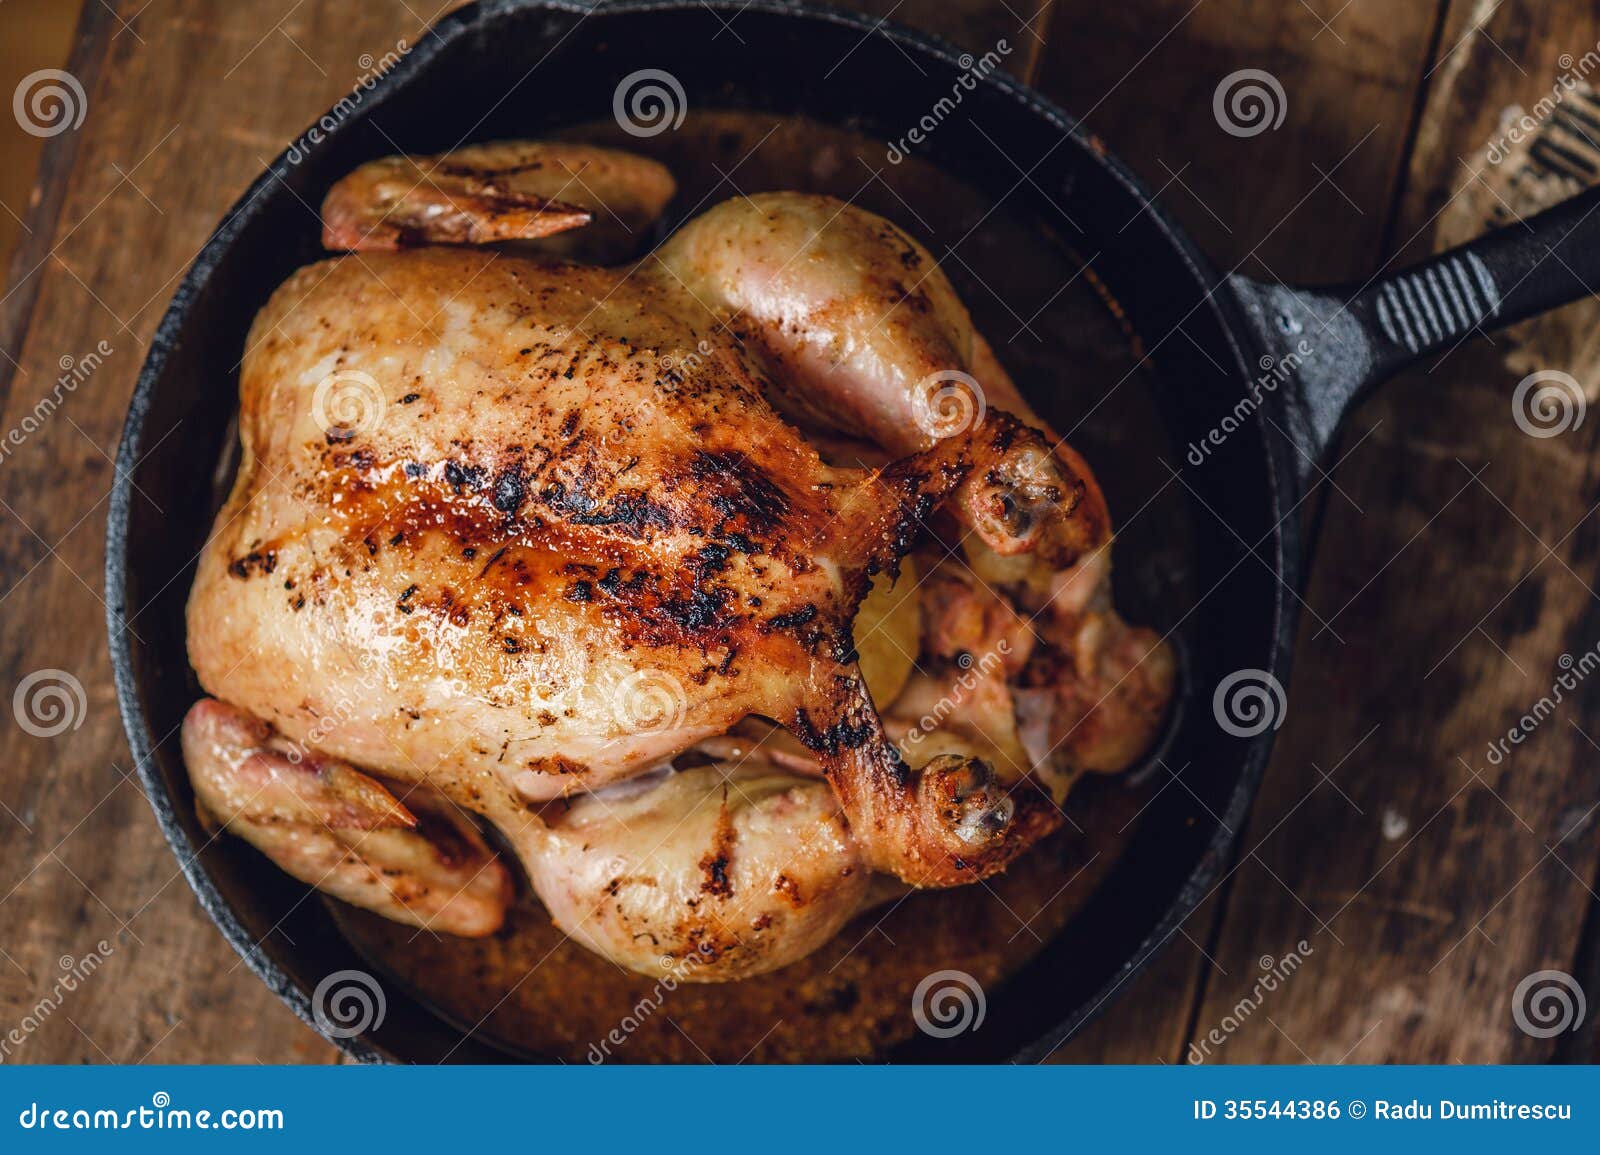 whole roast chicken